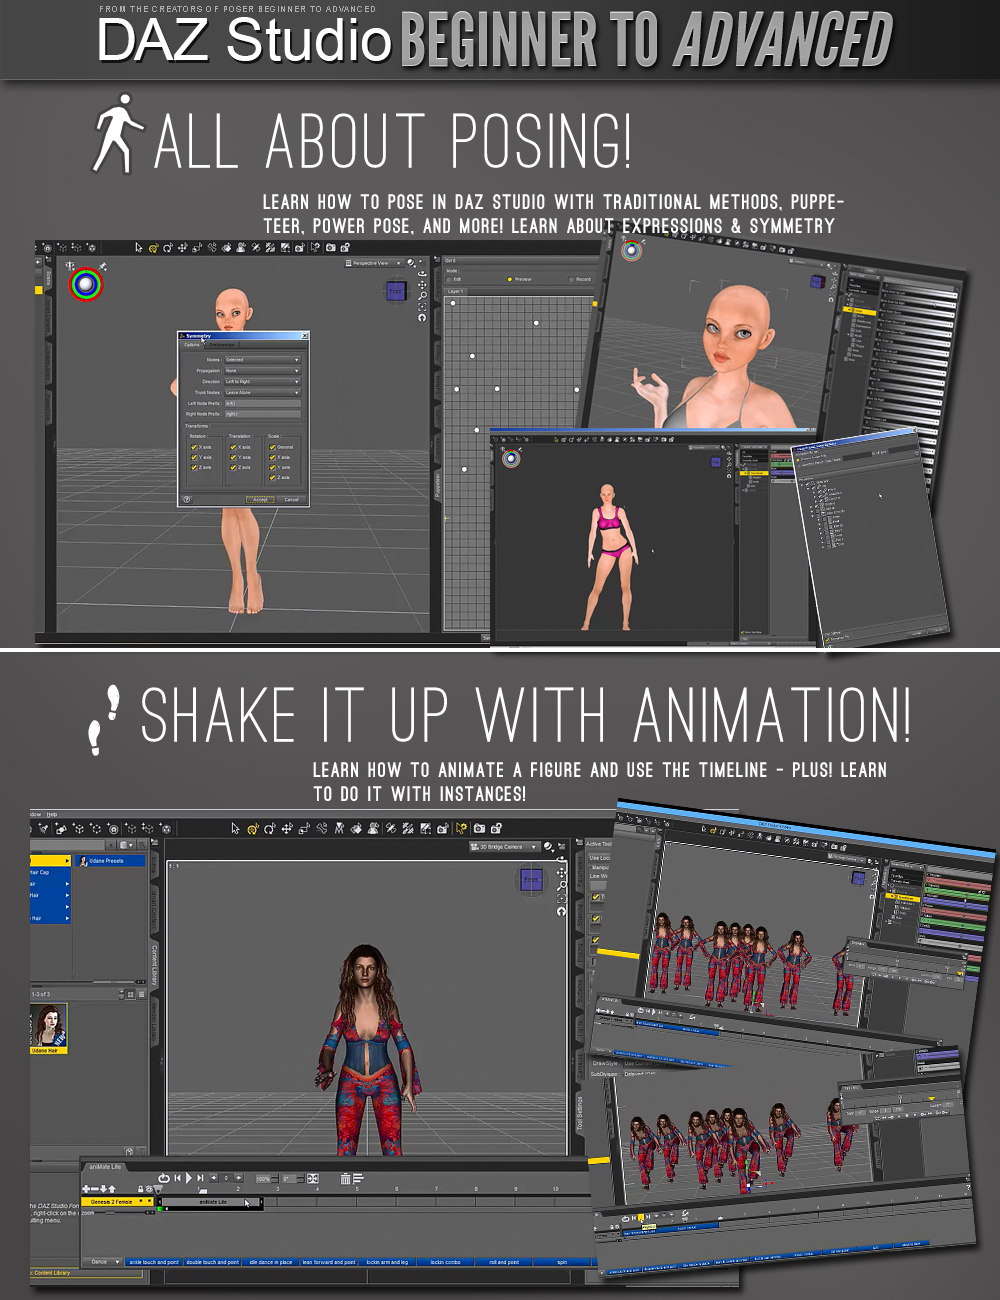 DAZ Studio Beginner to Advanced by: Fugazi1968ironman13, 3D Models by Daz 3D